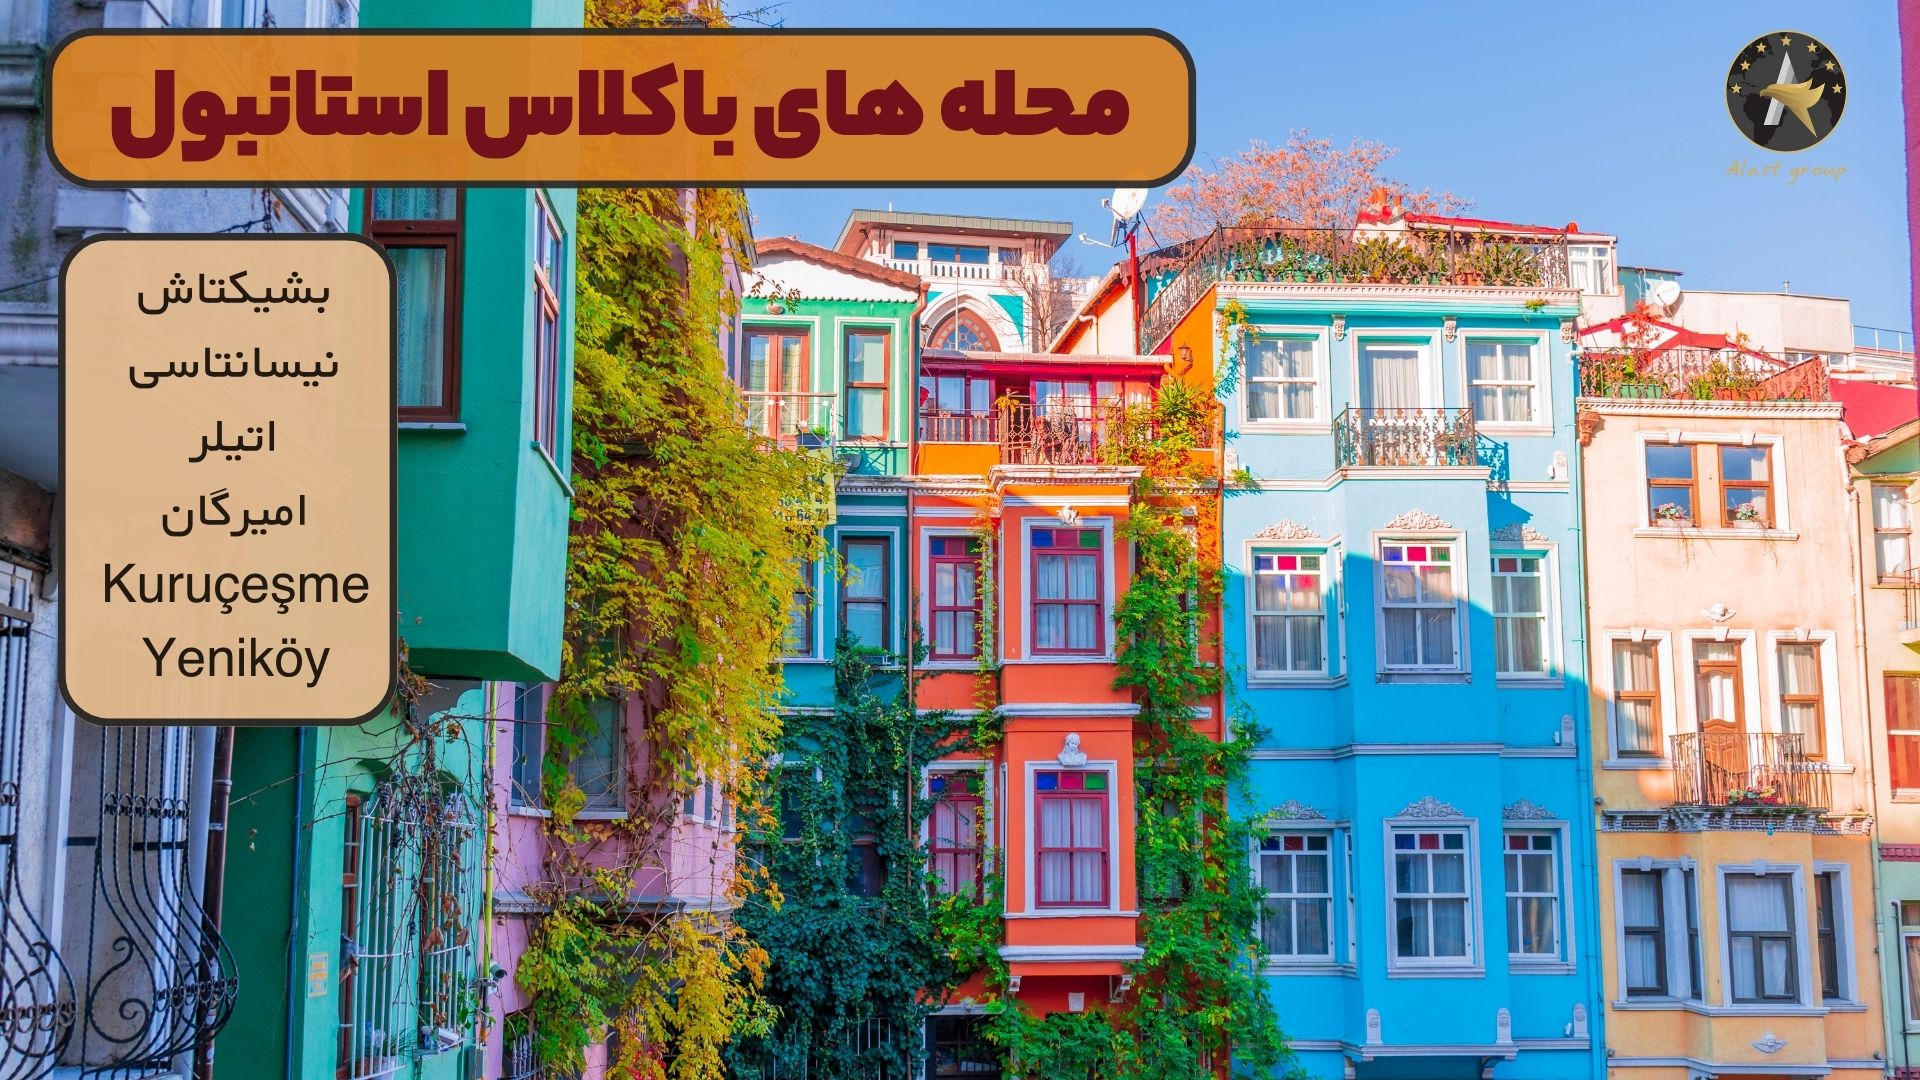 محله های باکلاس استانبول: مظهر ثروت و شکوه